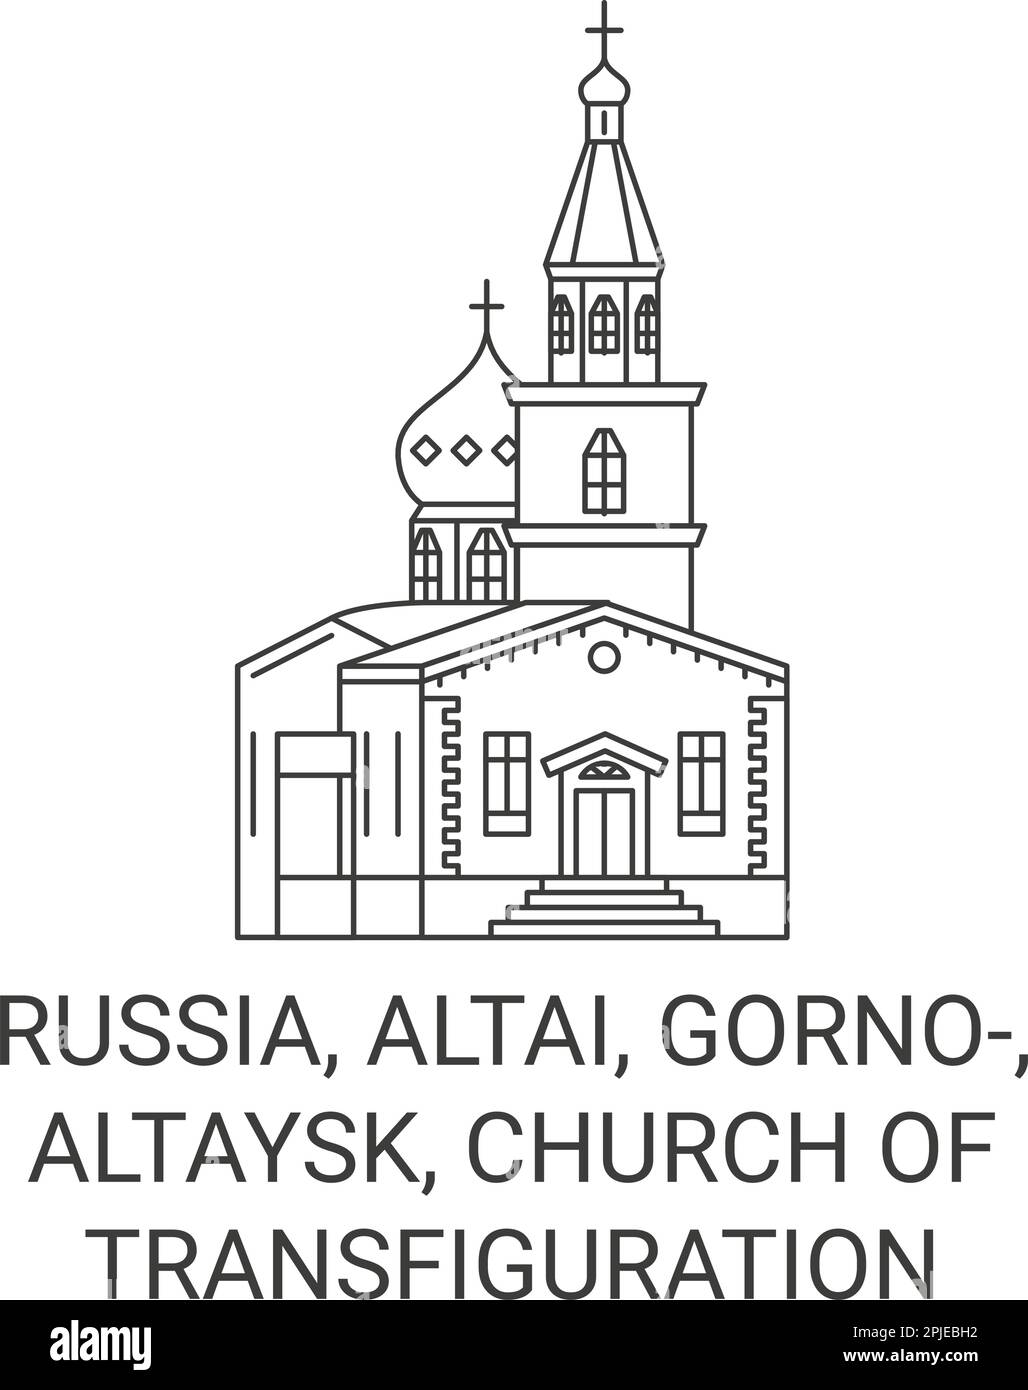 Russia, Altai, Gorno, Altaysk, Church Of Transfiguration travel landmark vector illustration Stock Vector